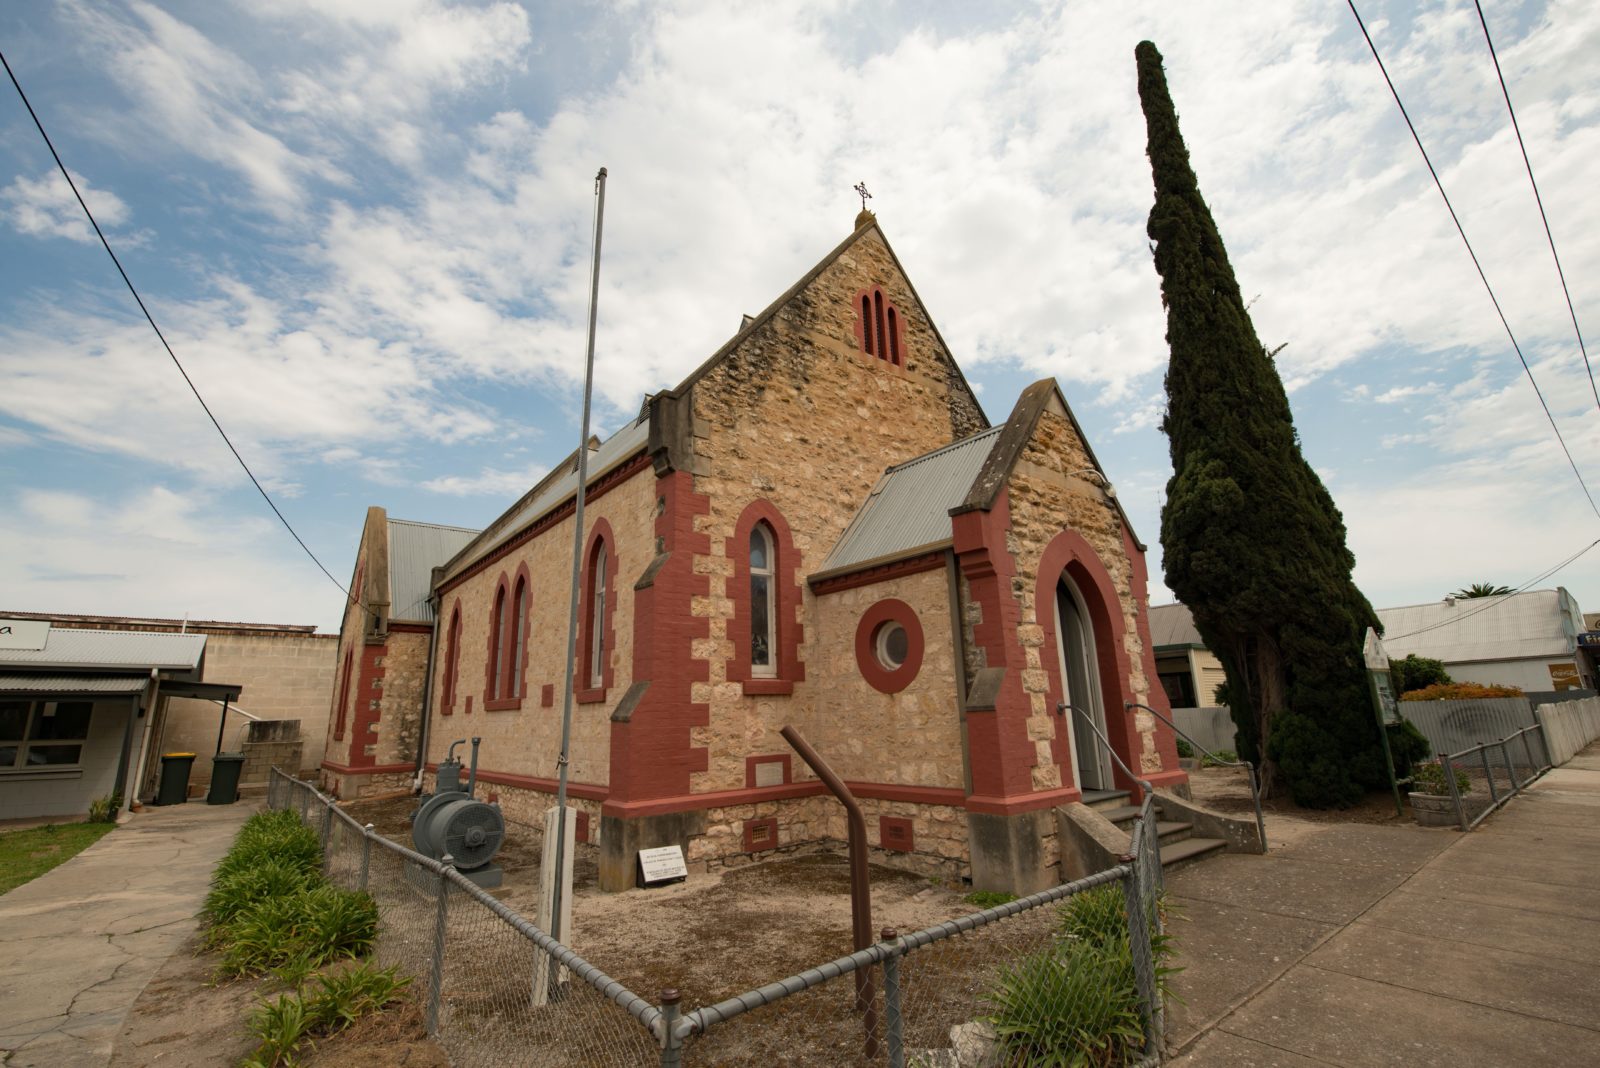 1910 Congregational Church